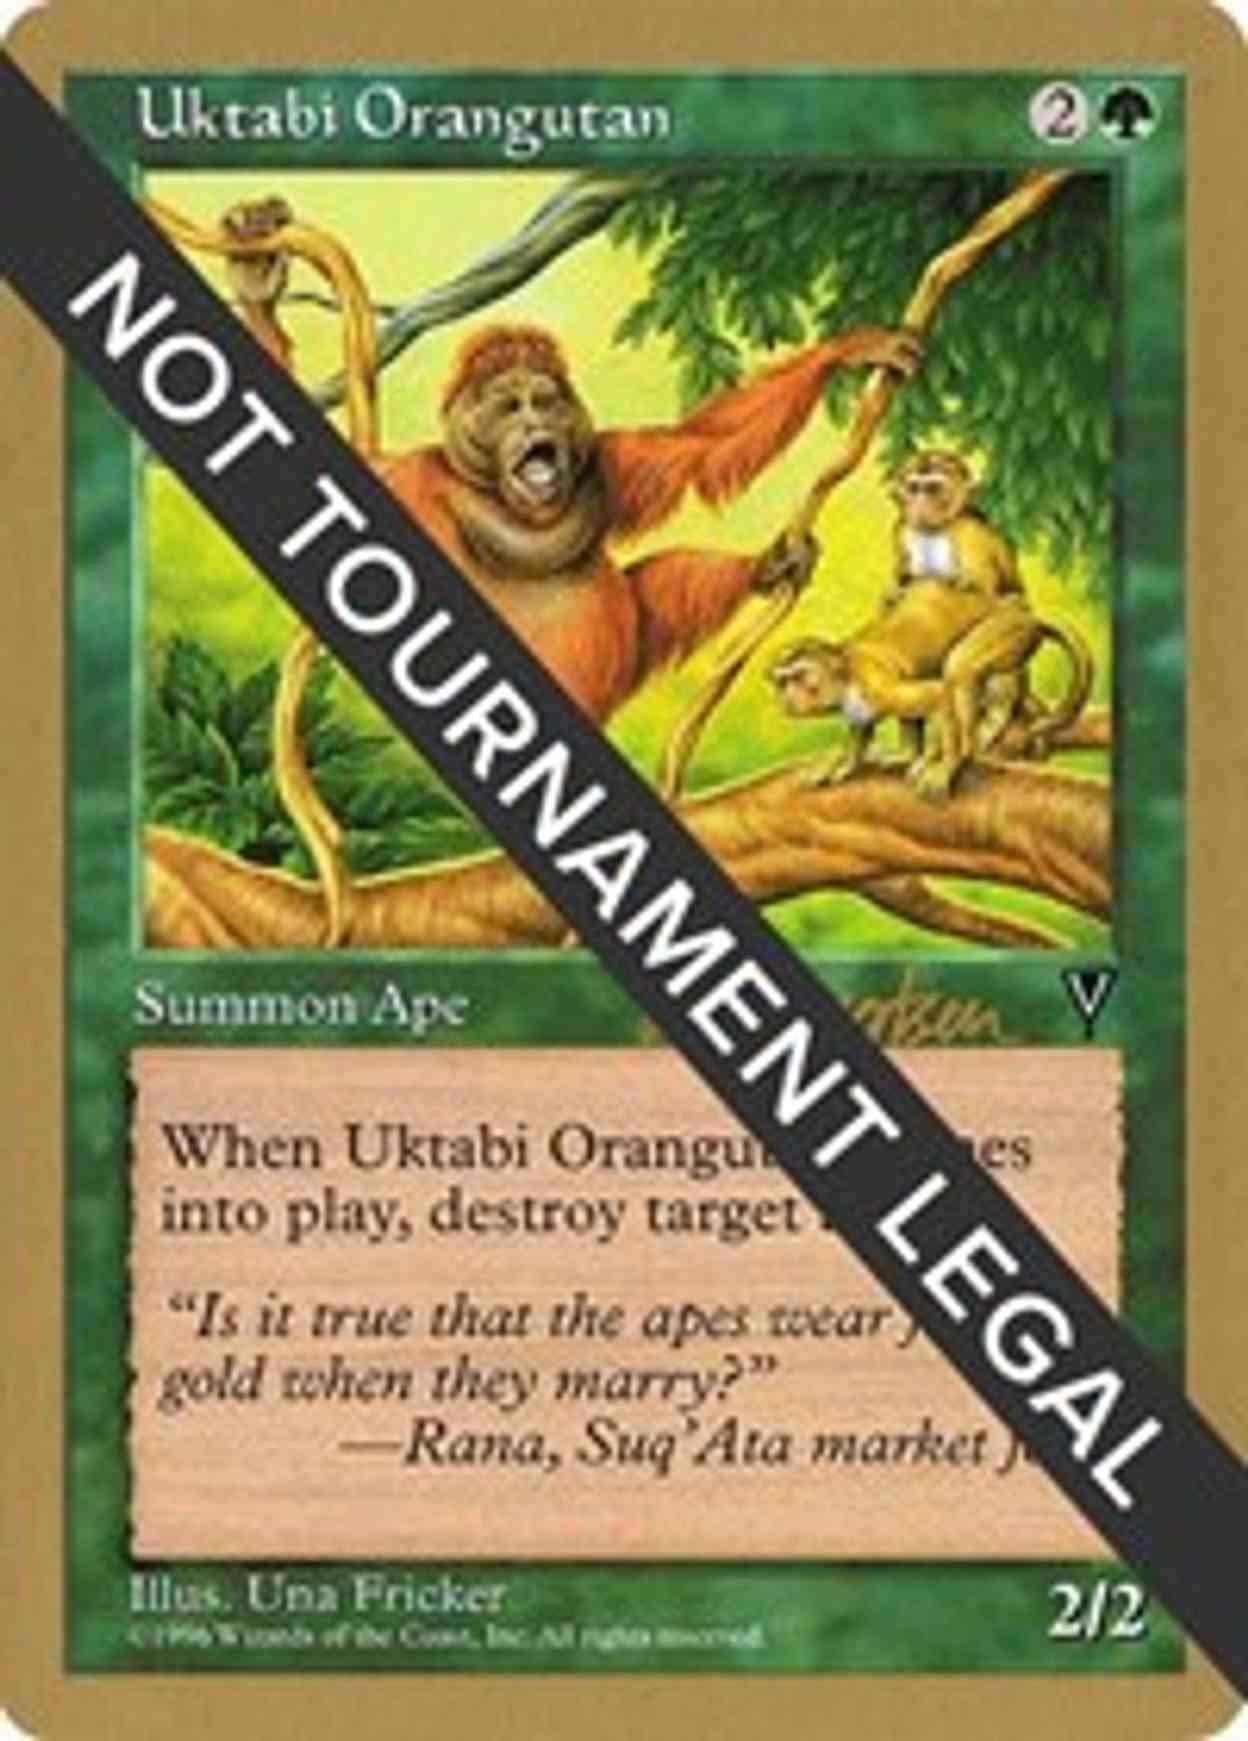 Uktabi Orangutan - 1997 Svend Geertsen (VIS) magic card front